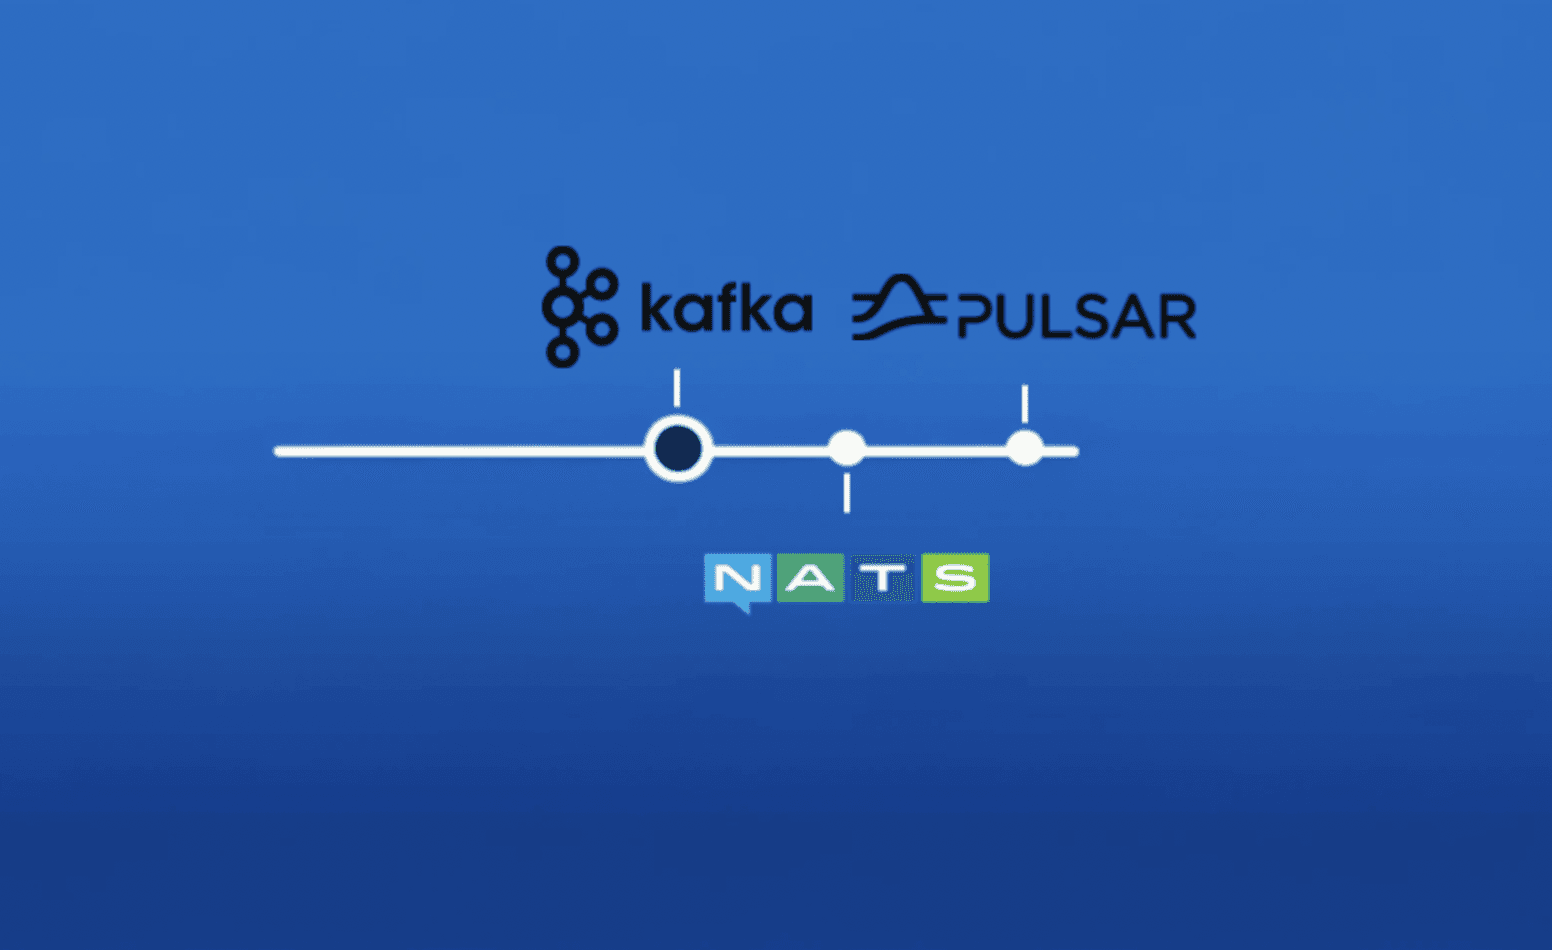 Kafka vs. Pulsar vs. NATS pic 0.png